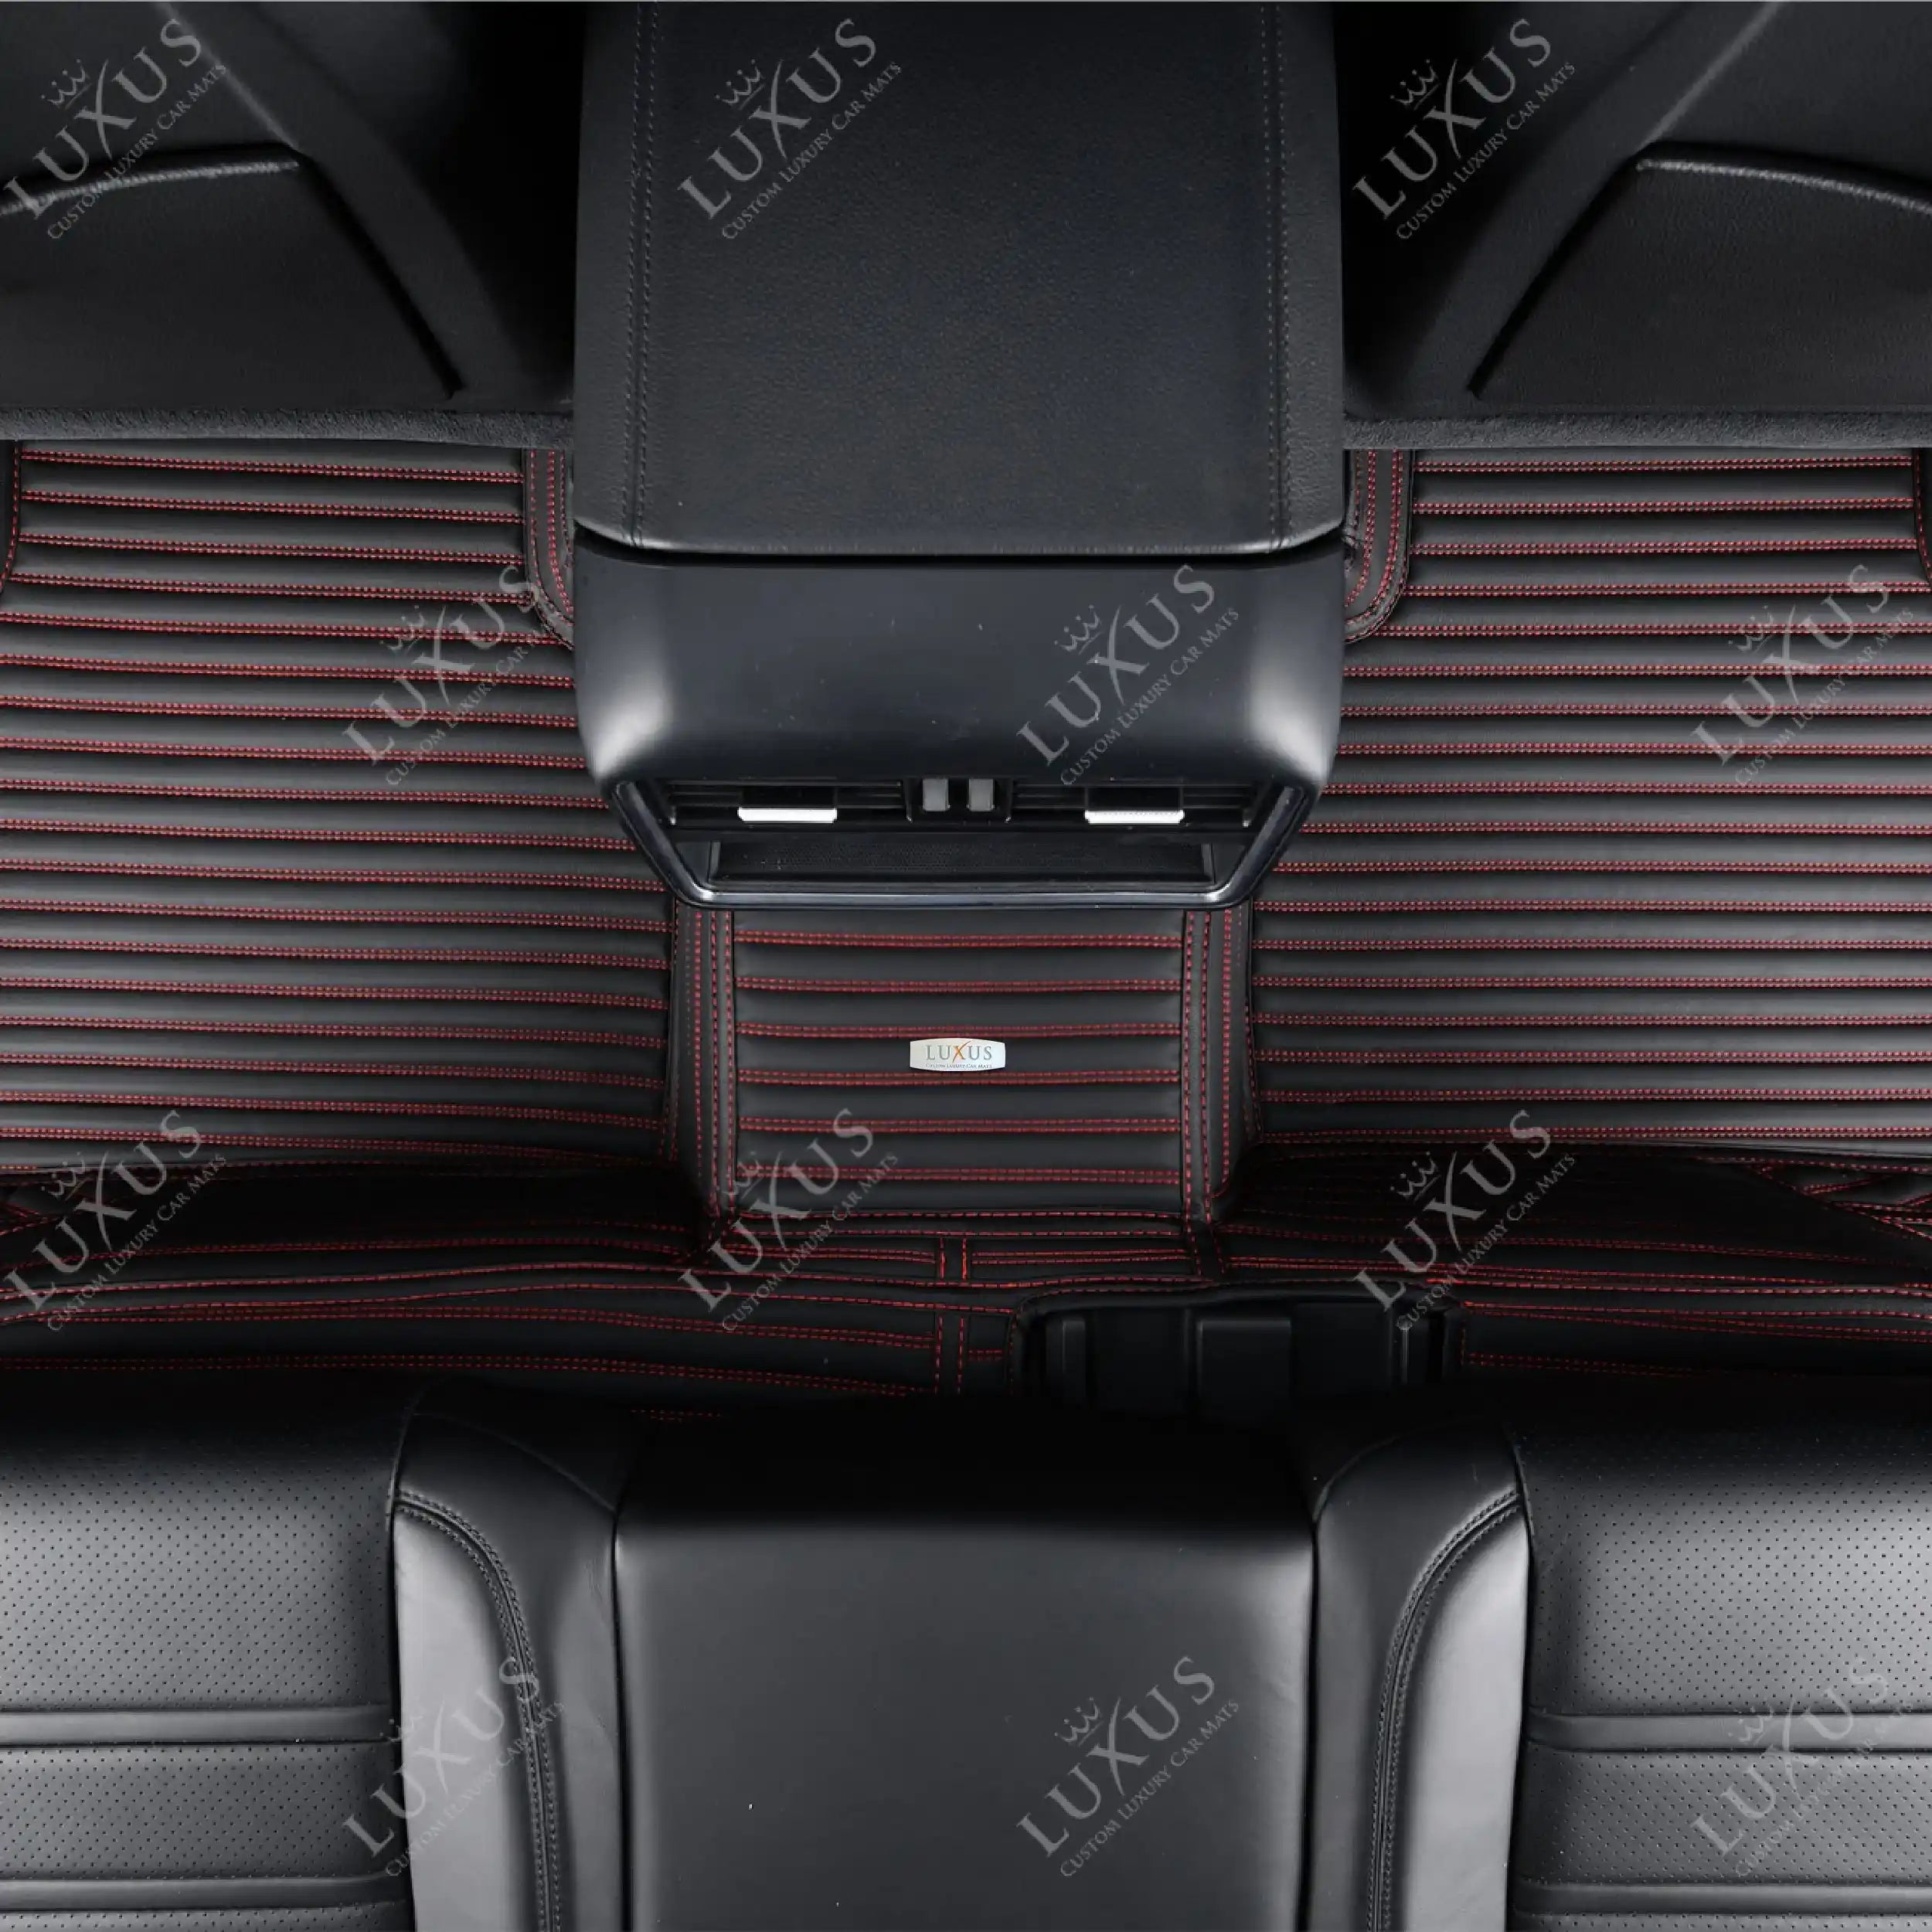 Black & Red Stitching Stripe Luxury Car Mats Set